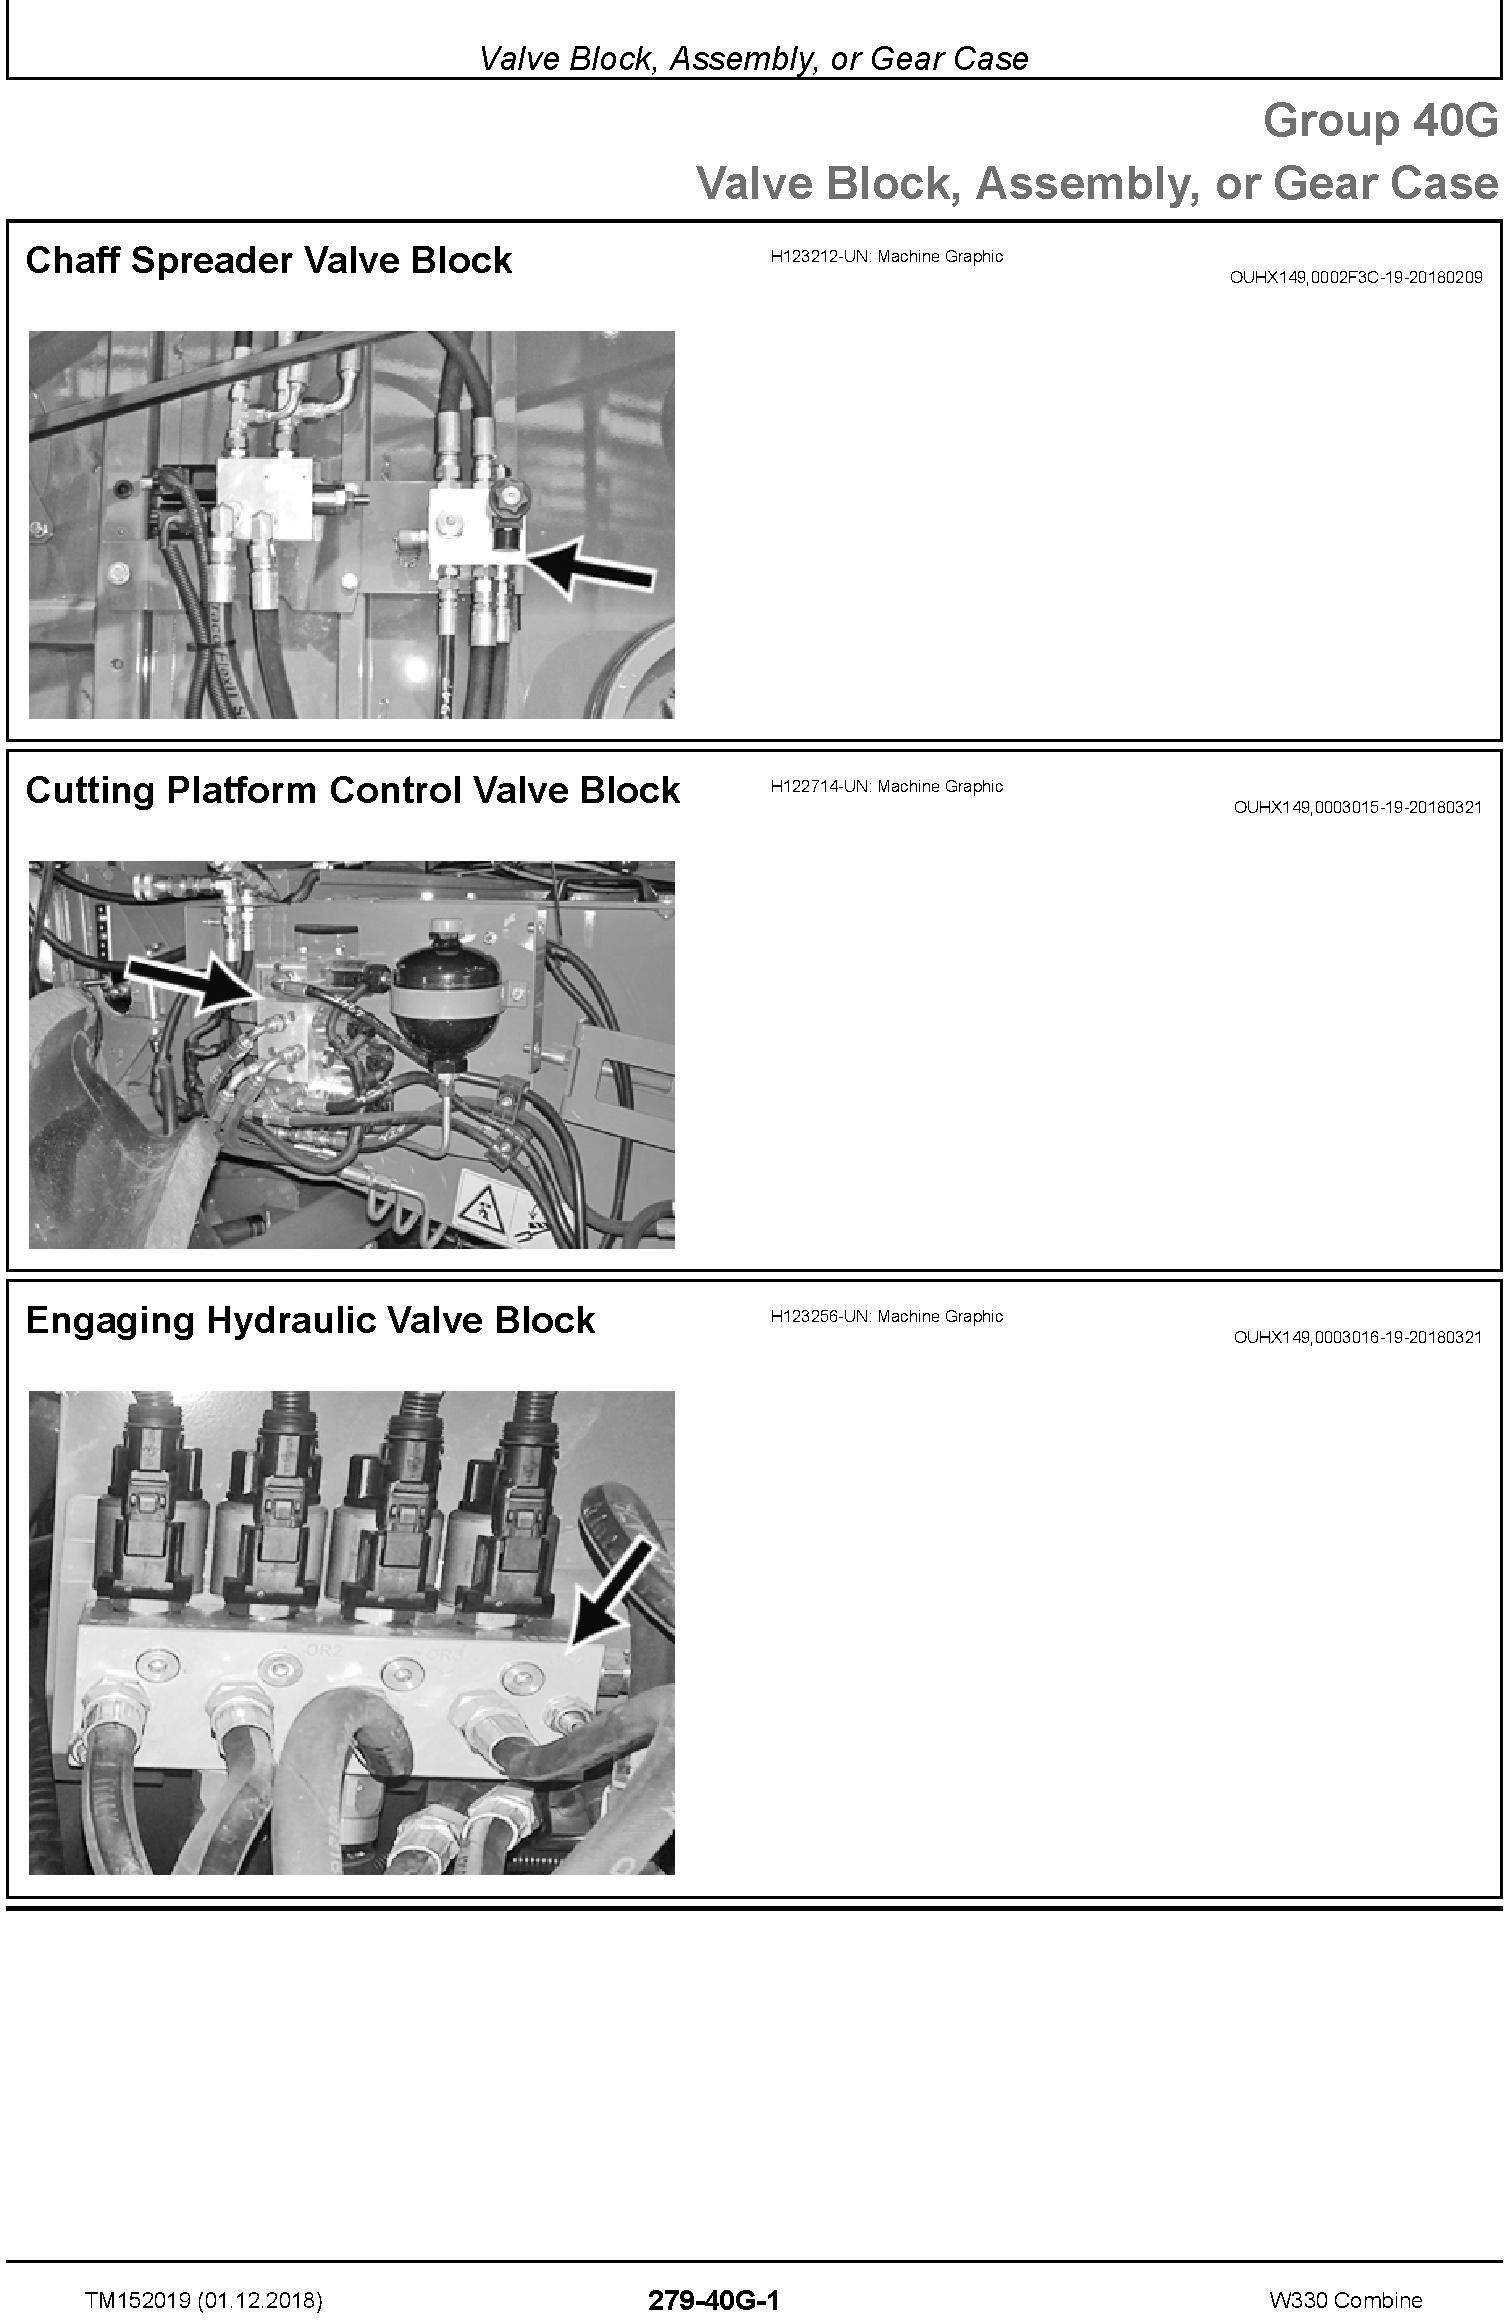 John Deere W330 Combine Diagnostic Technical Manual (TM152019) - 3